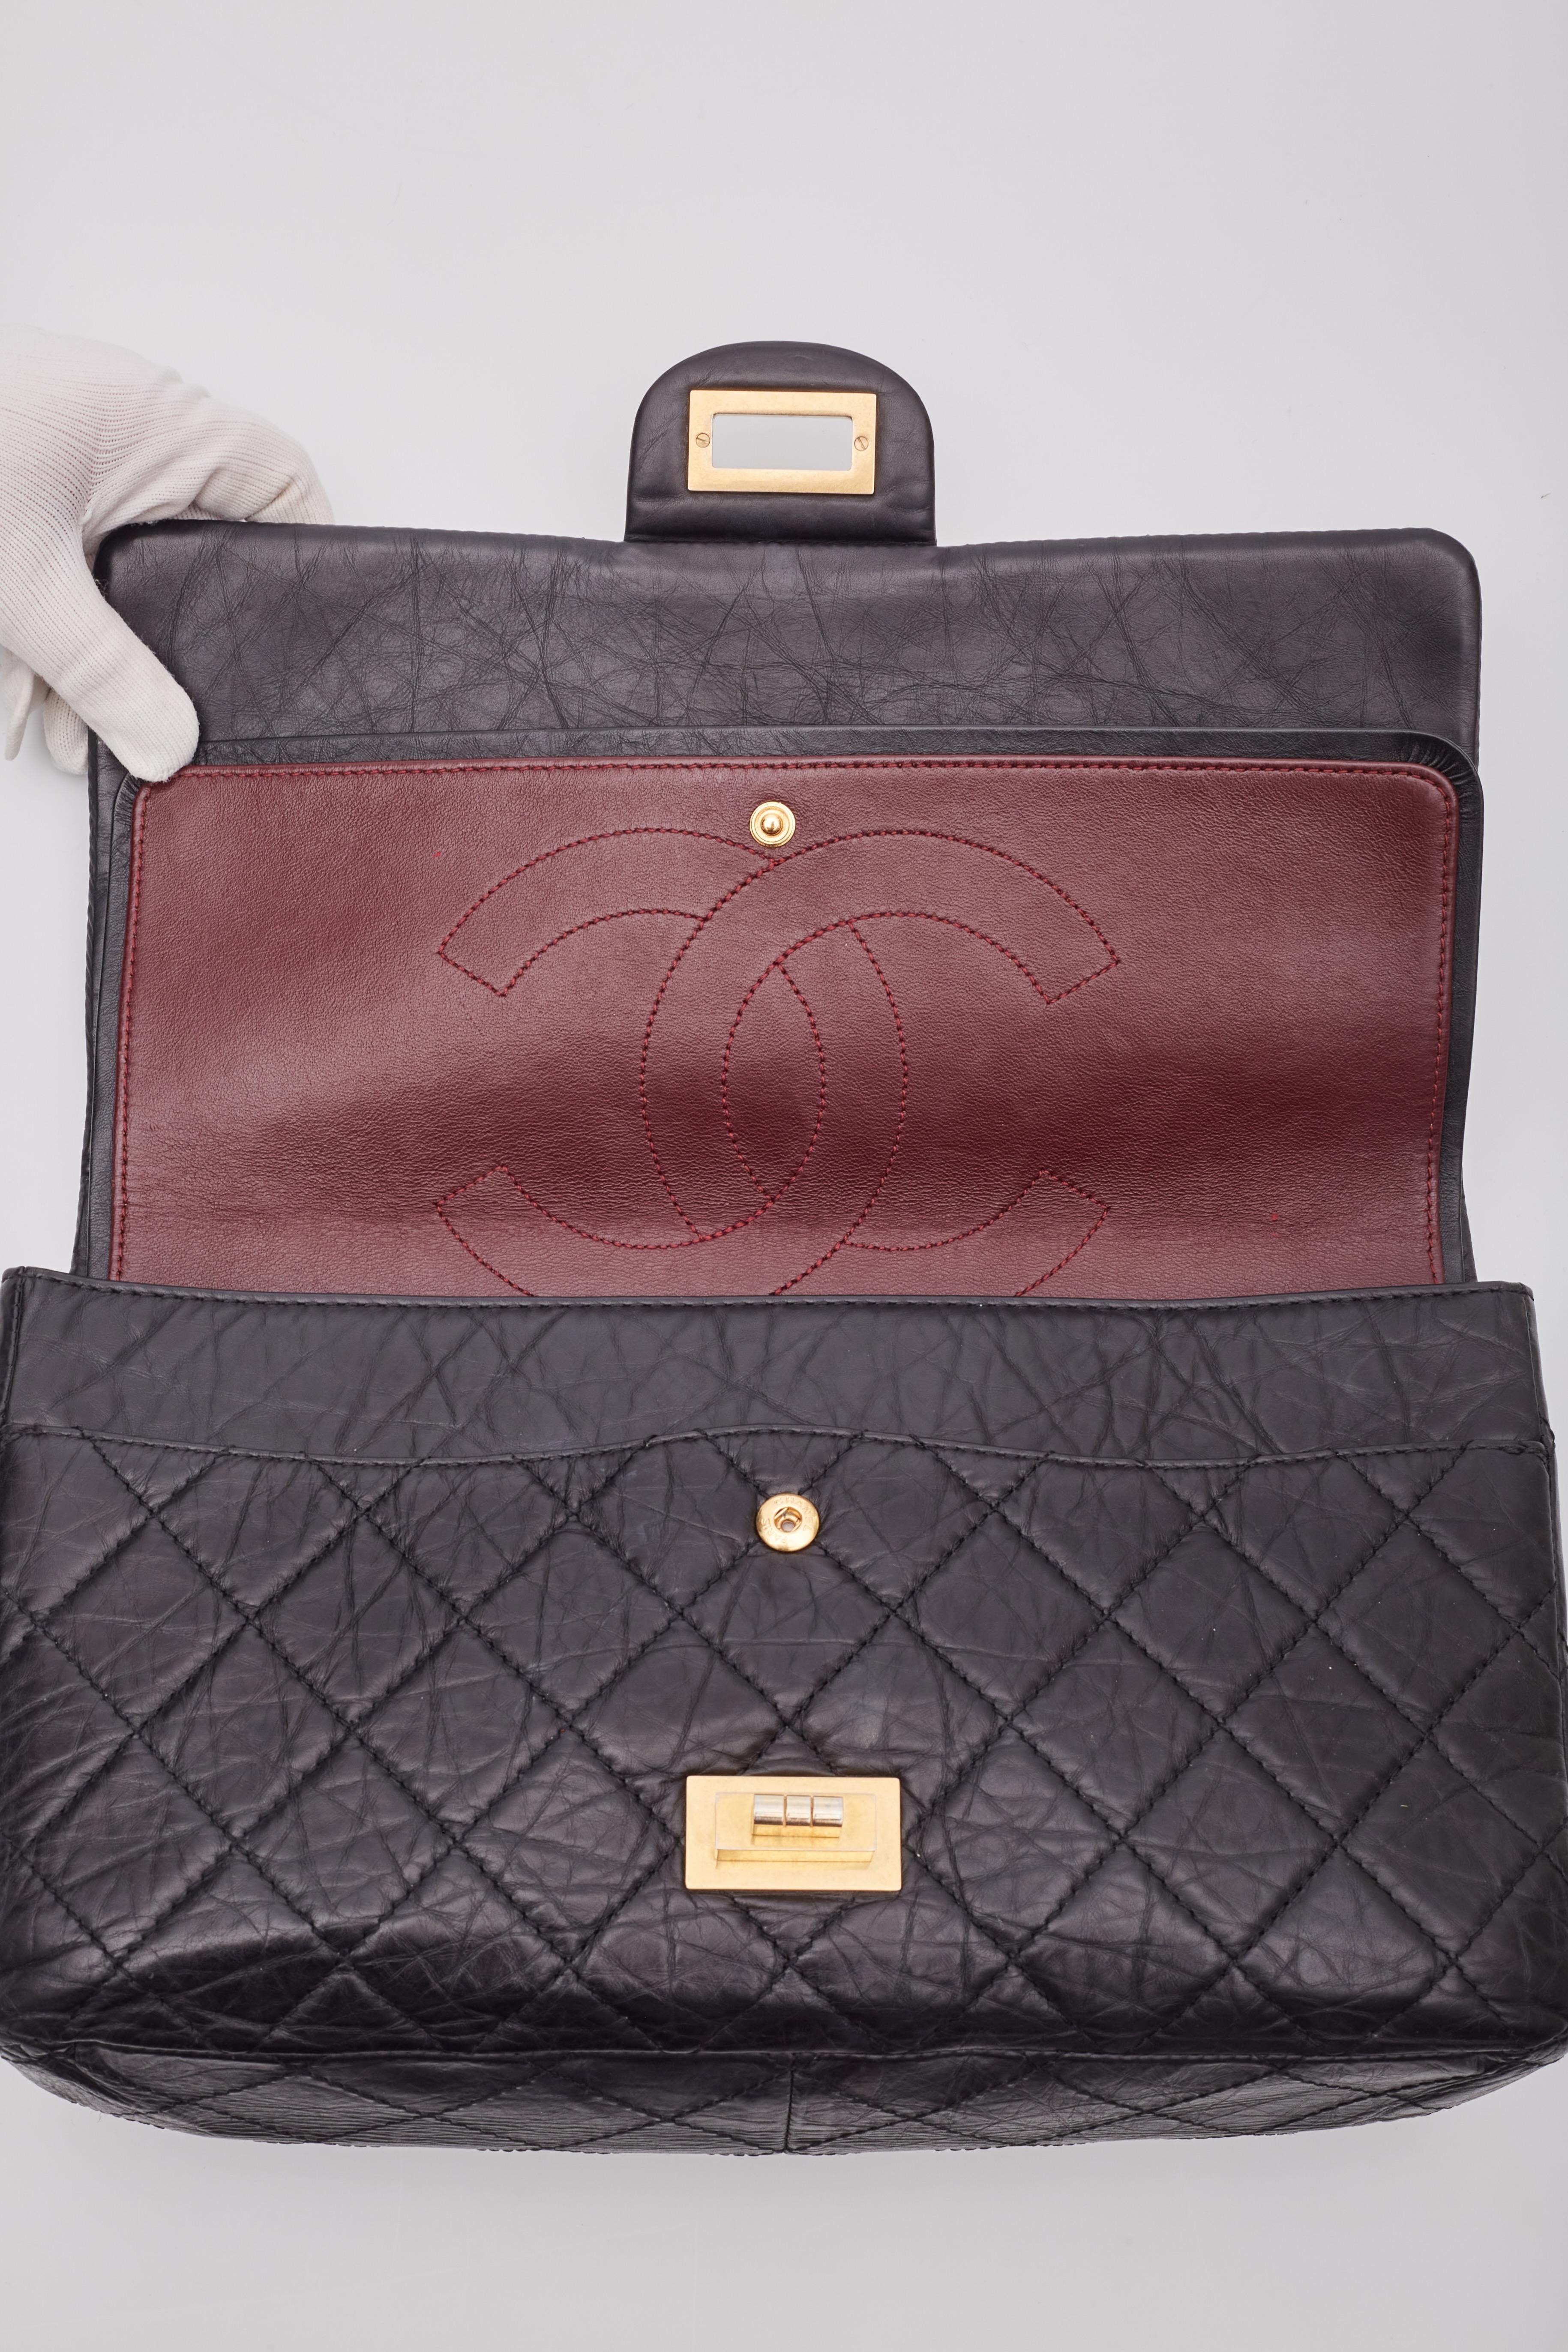 Chanel Calfskin Black Reissue 2.55 227 Flap Bag For Sale 7